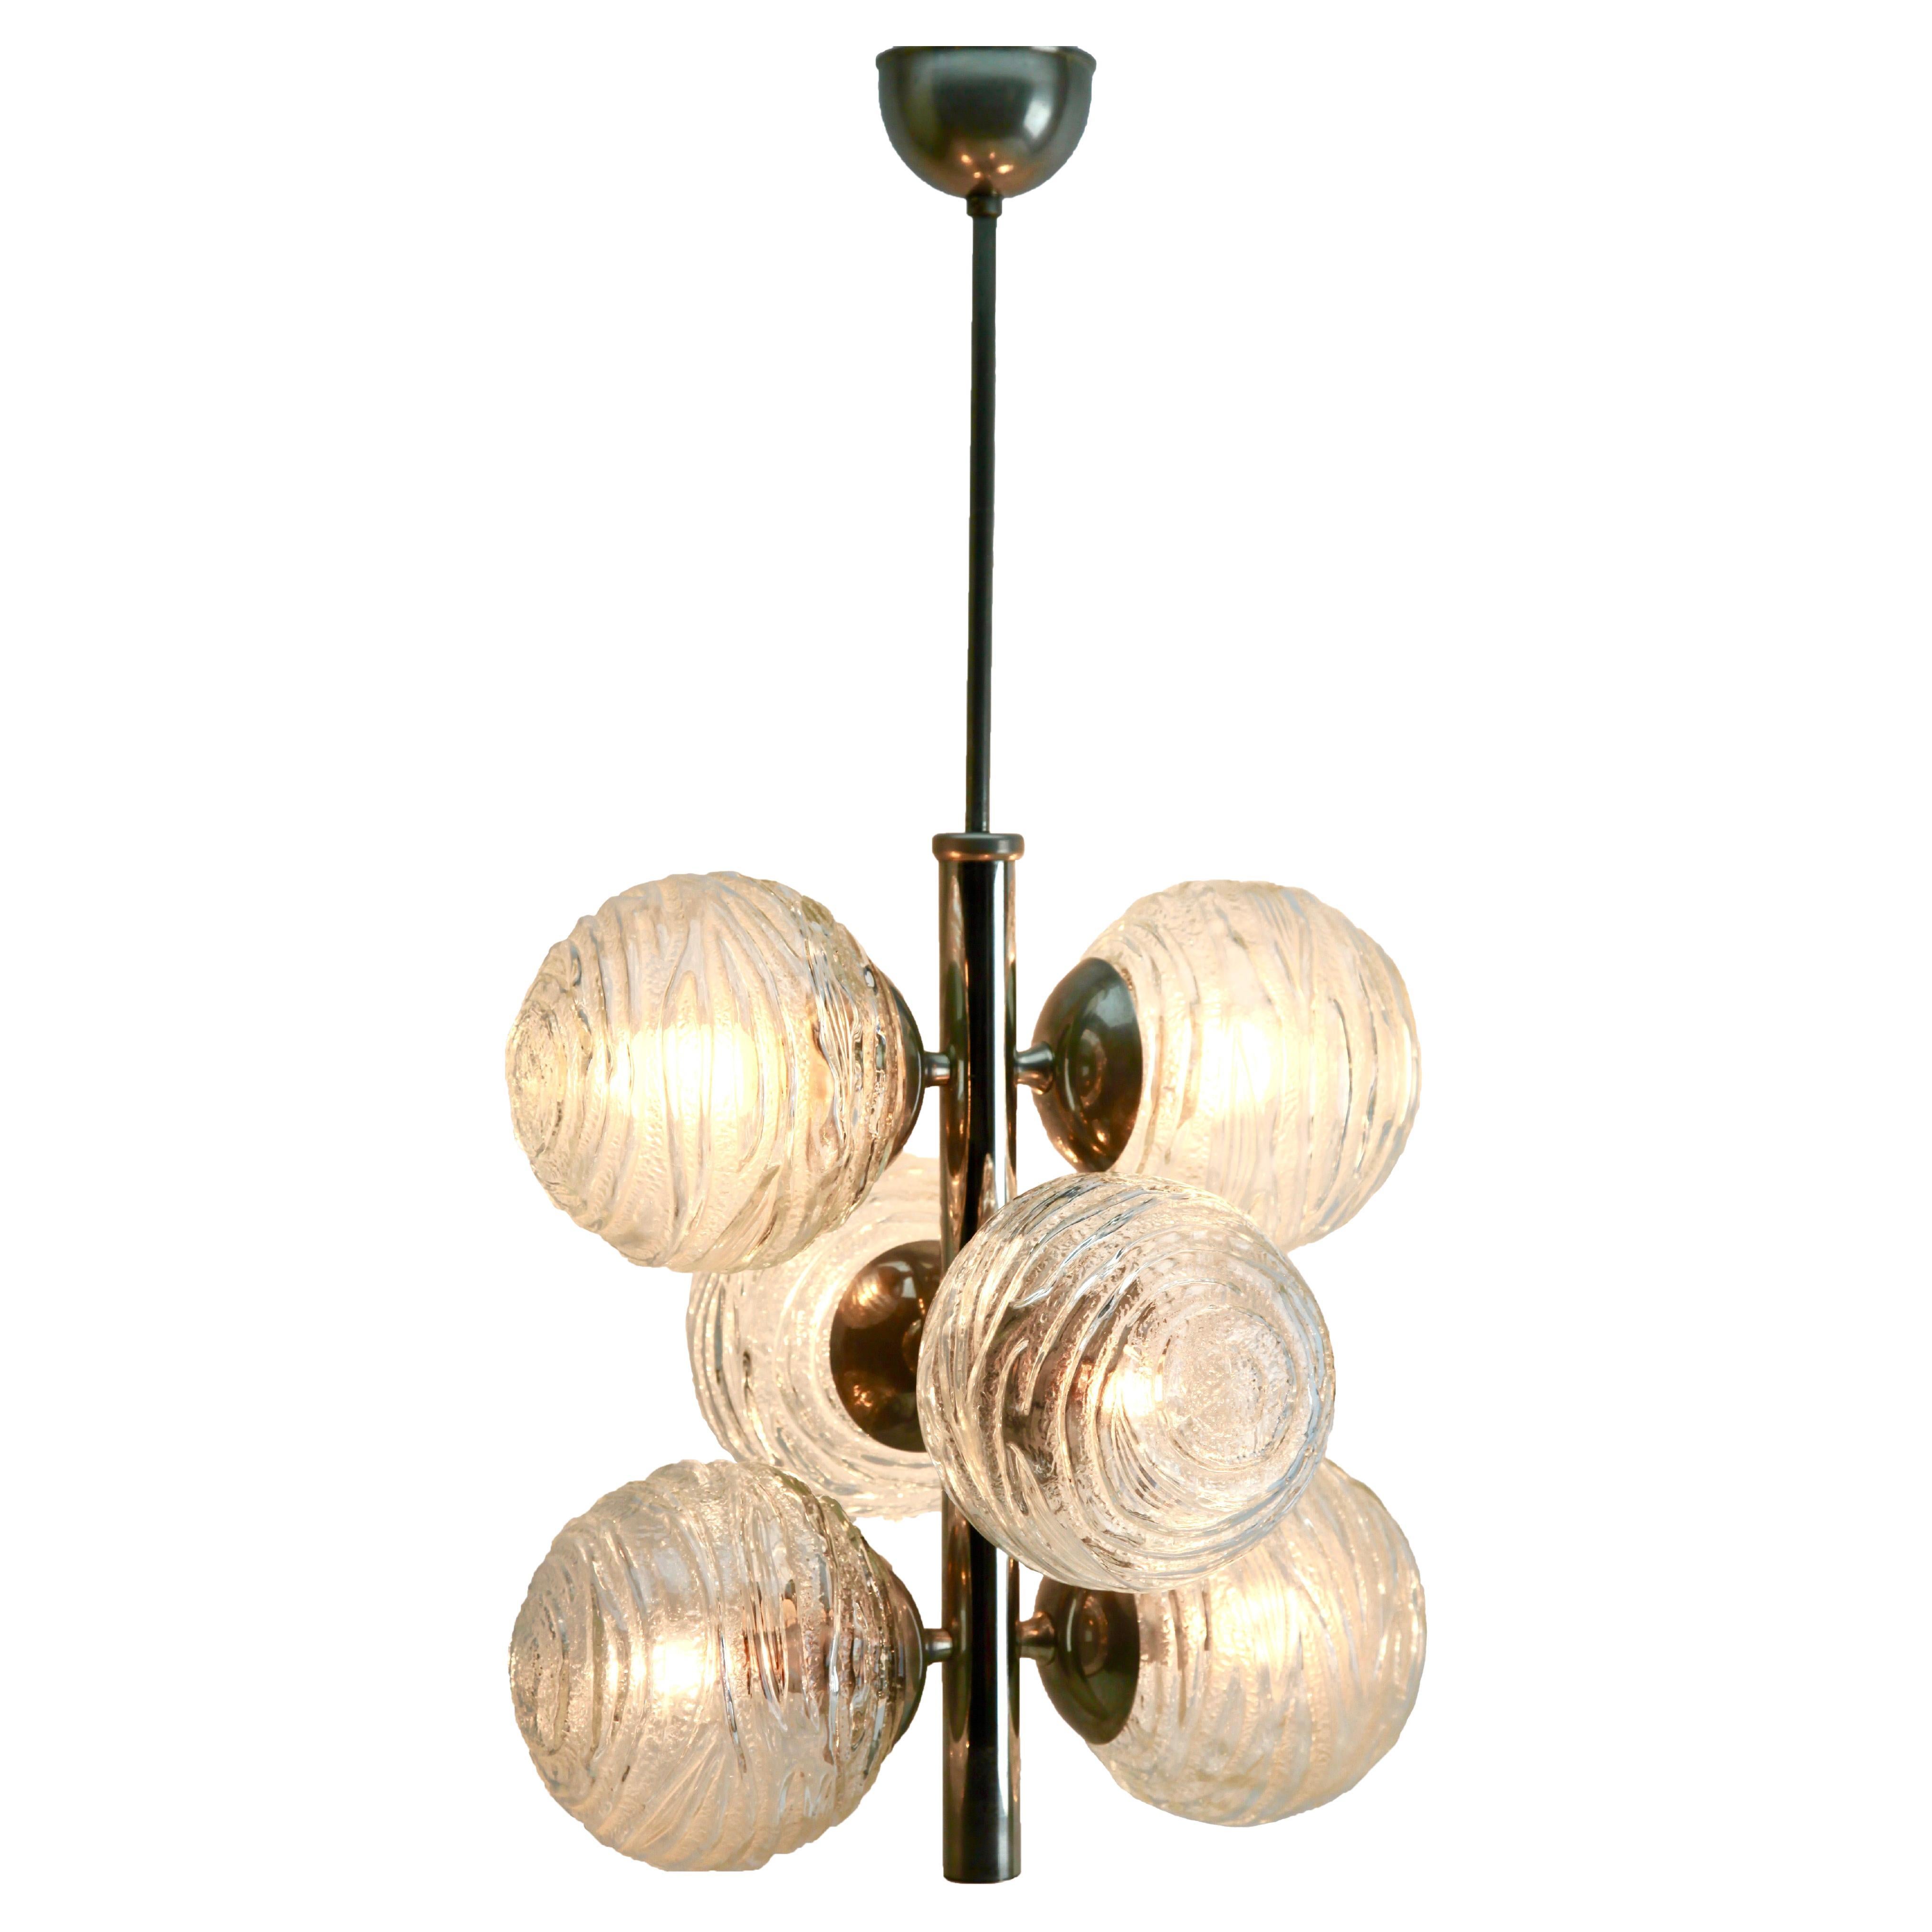 Fischer Leuchten ‘Germany’ Swirl Ball Pendant Stem Lamp with 6 Globular Lights For Sale